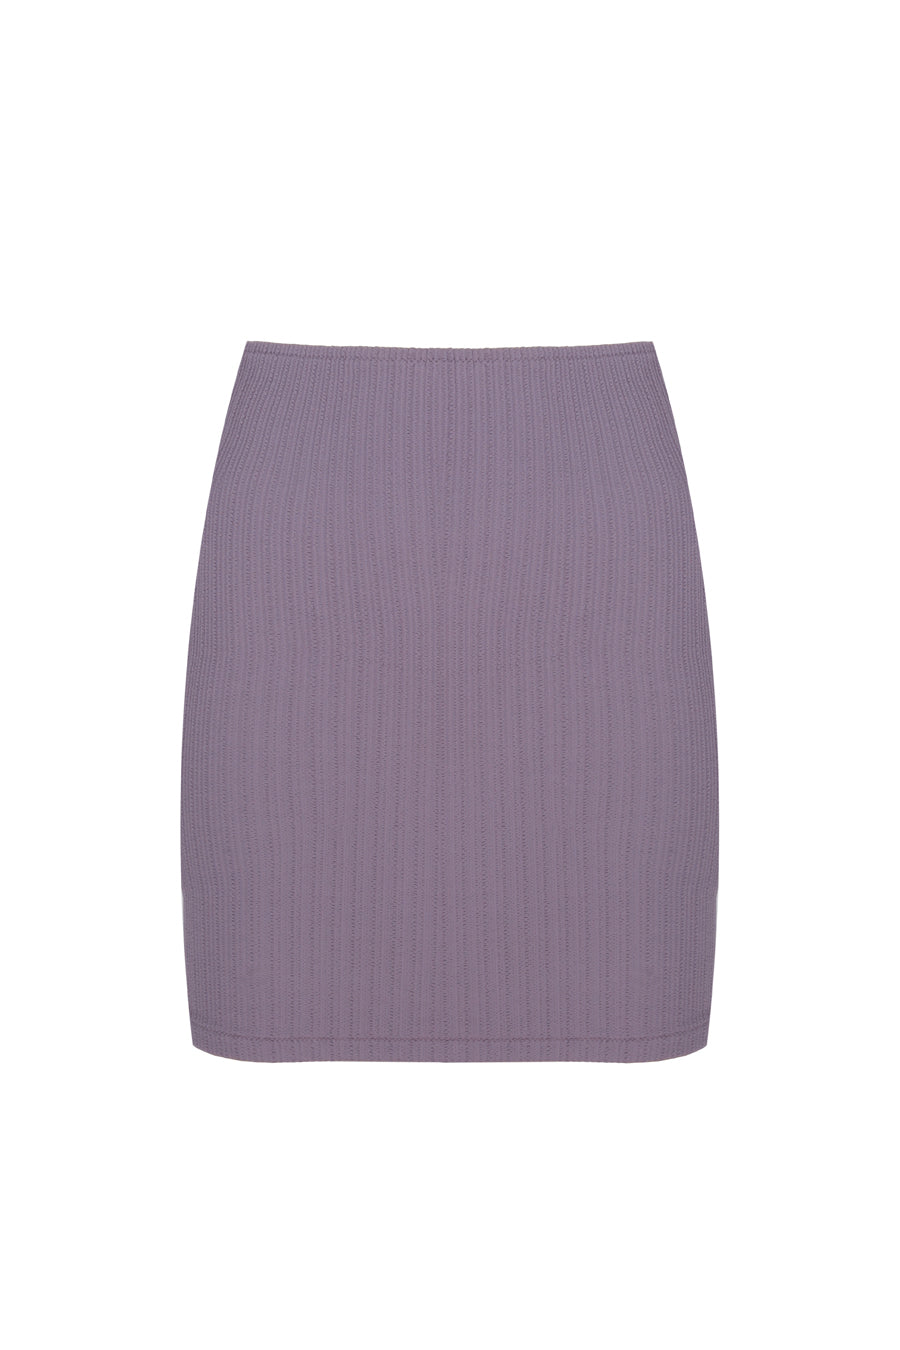 Marie Stretch Grey Textured Skirt